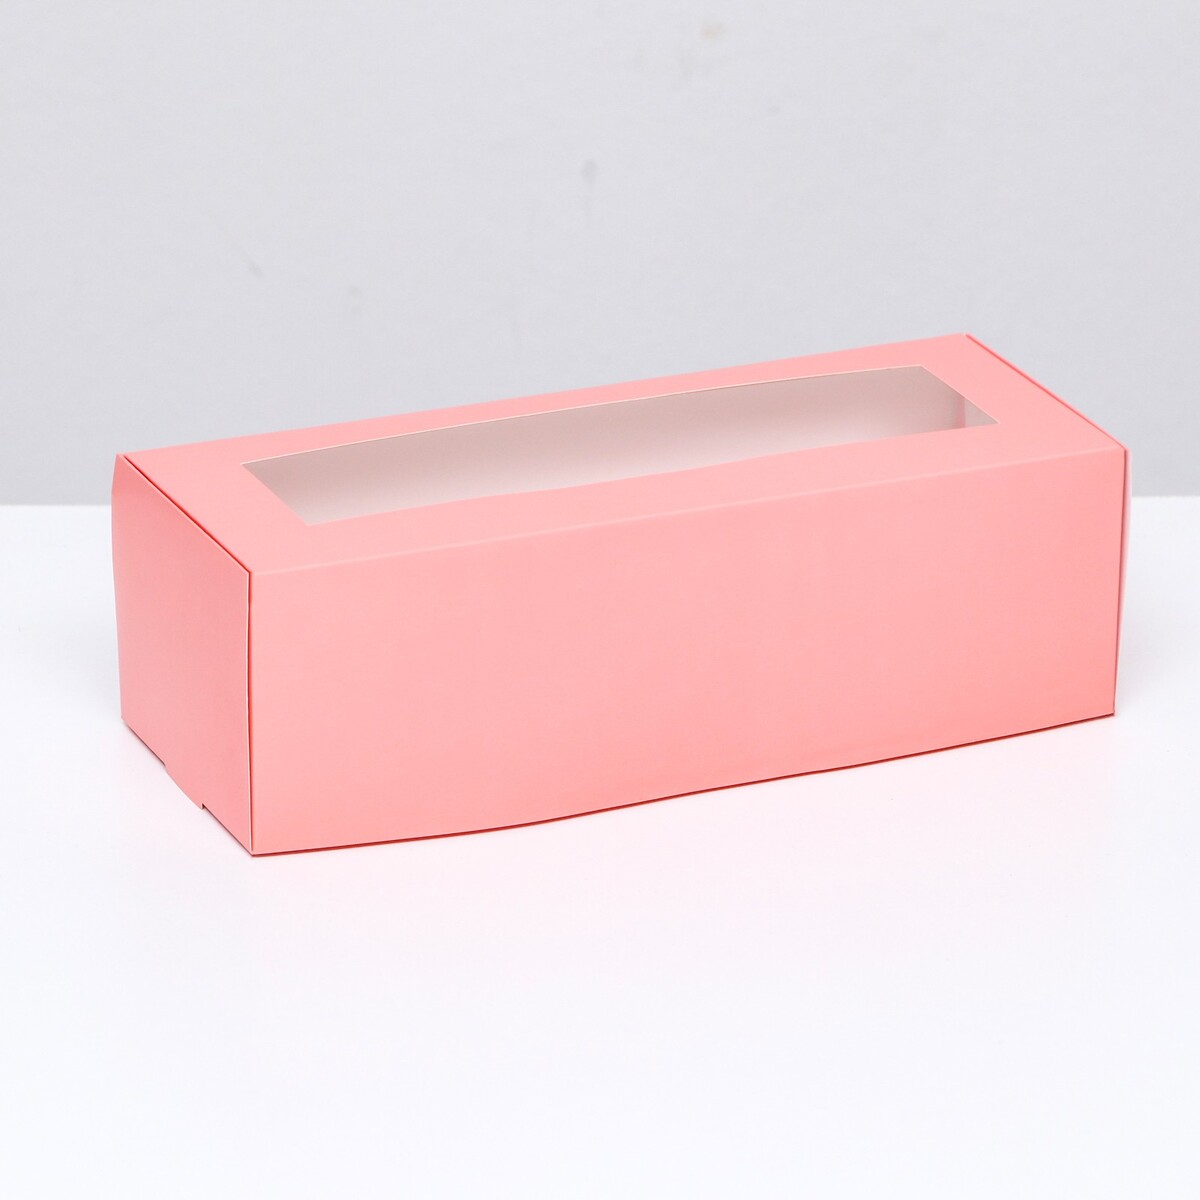 Коробка складная с окном под рулет, розовая, 26 х 10 х 8 см коробка складная с окном под рулет голубая 26 х 10 х 8 см